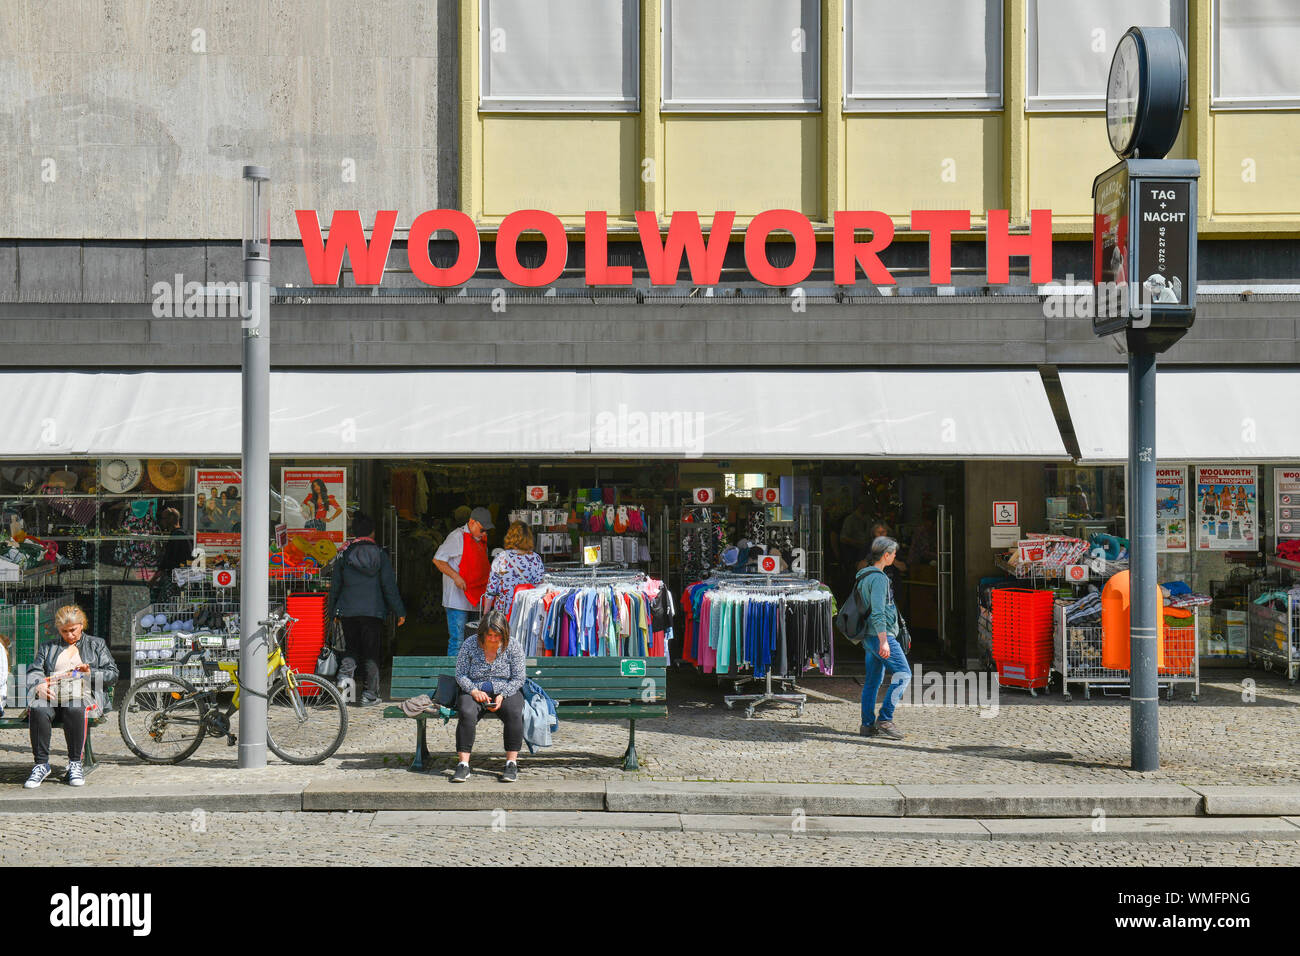 Woolworth, Marktplatz, Altstadt, Spandau, Berlin, Deutschland Stock Photo